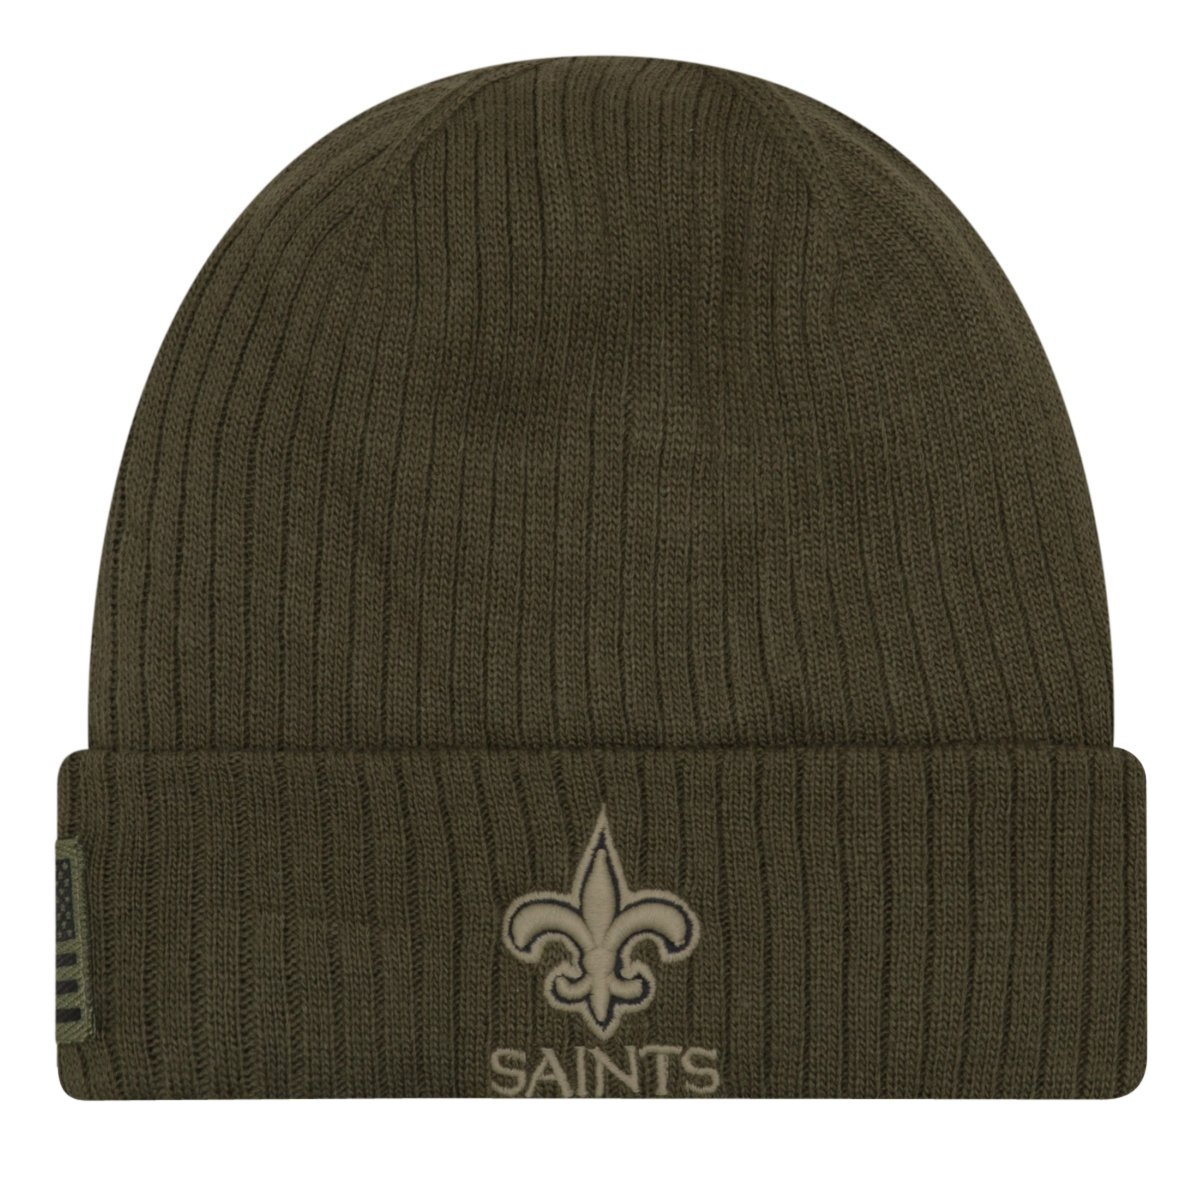 New Era Salute to Service Knit Beanie - New Orleans Saints | Men's ...